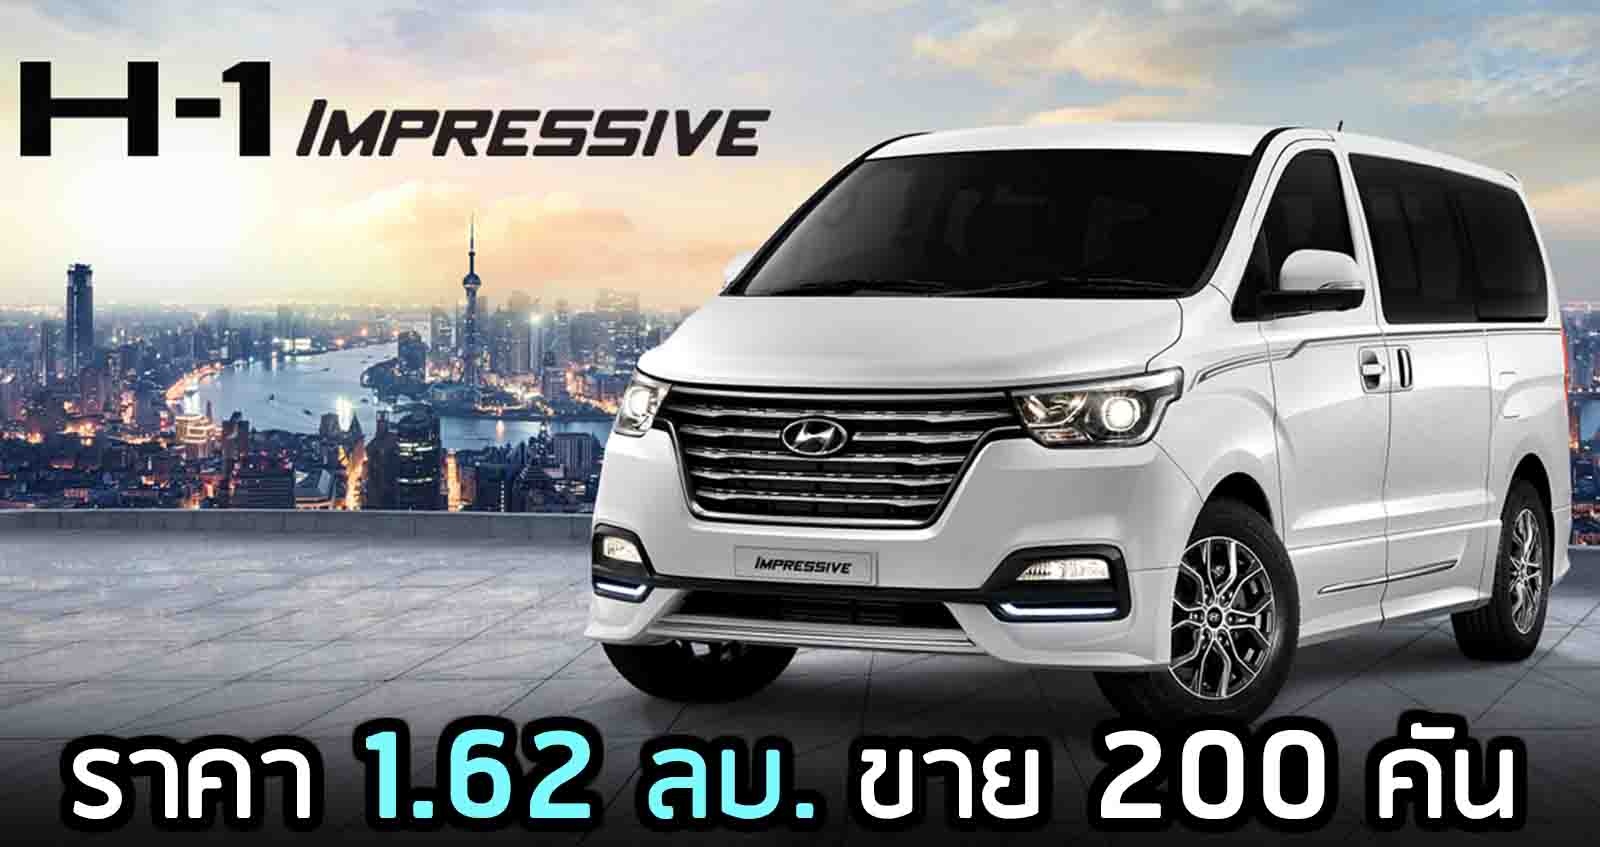 Hyundai H-1 Impressive รุ่นพิเศษ ราคา 1.62 ลบ. ในไทย